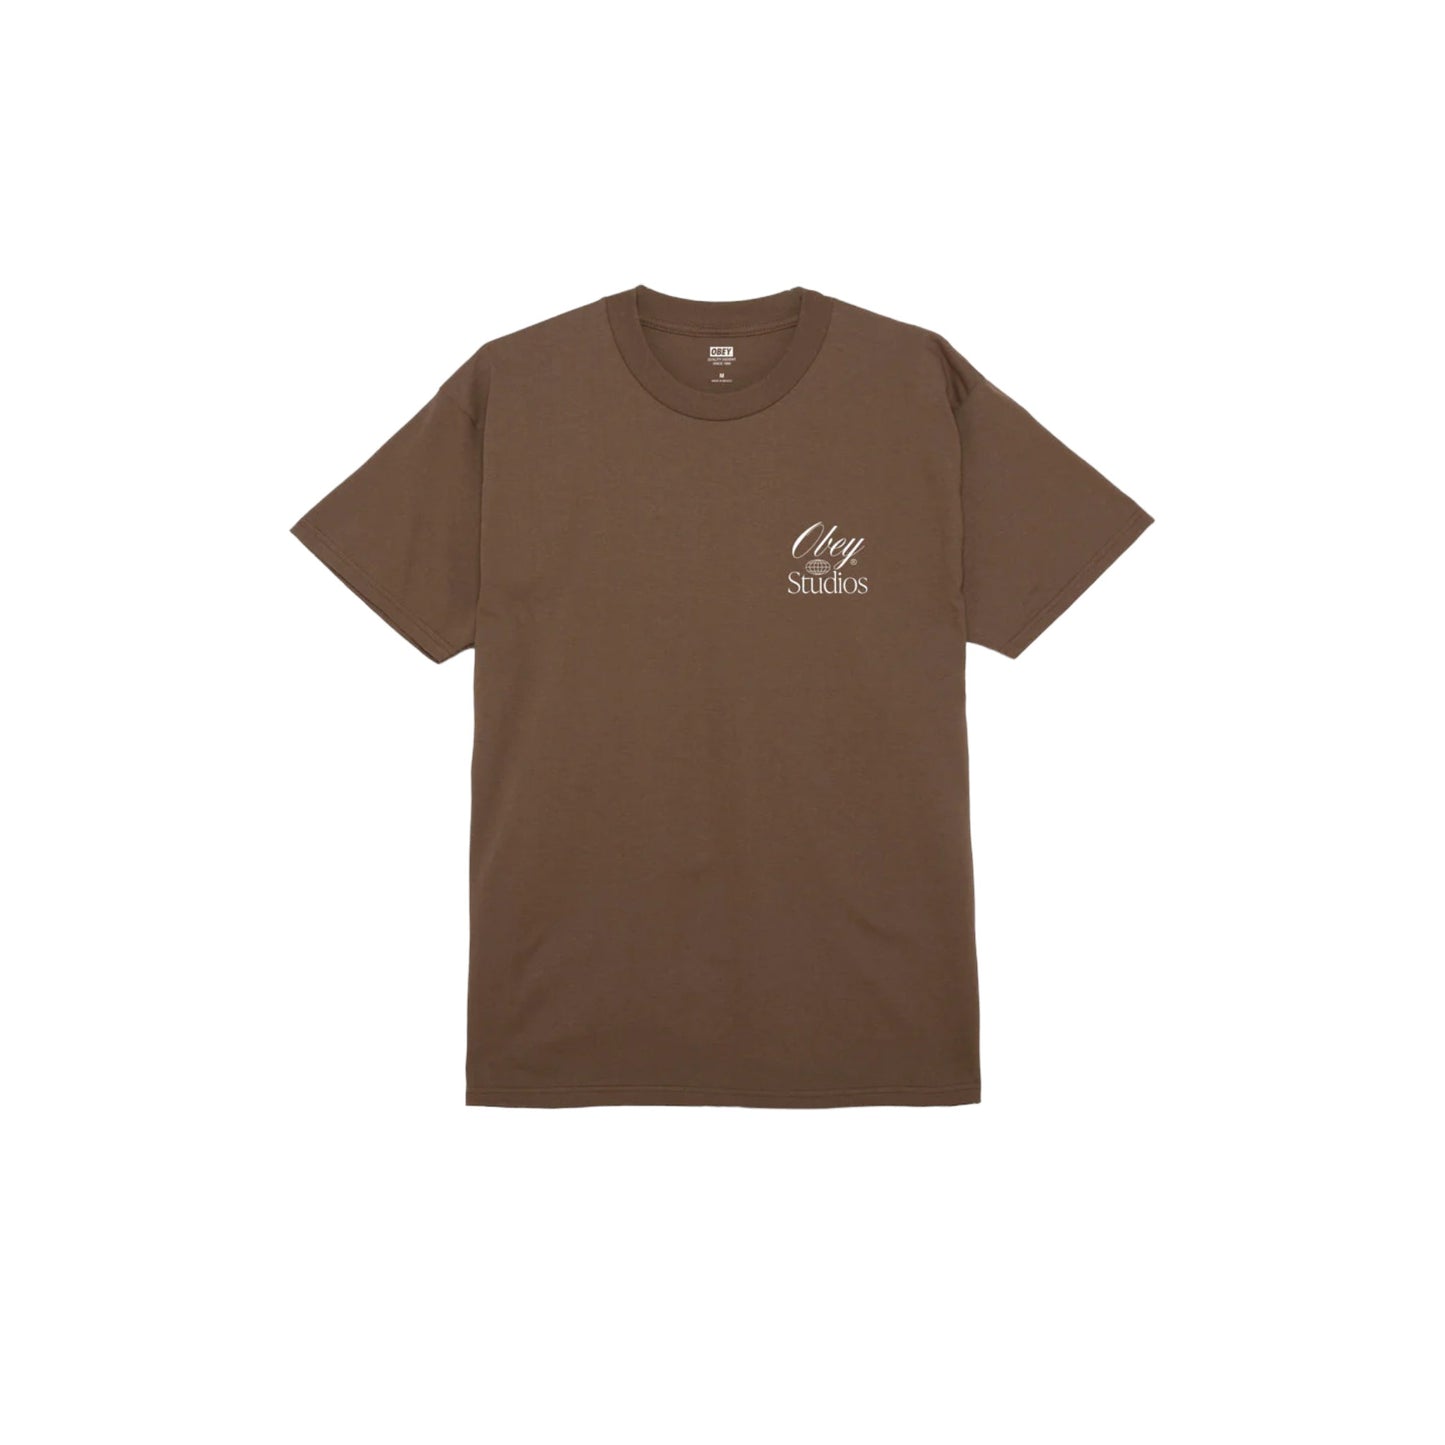 T-shirt Uomo Obey Studios Worldwide Classic Tee - Marrone - Francis Concept